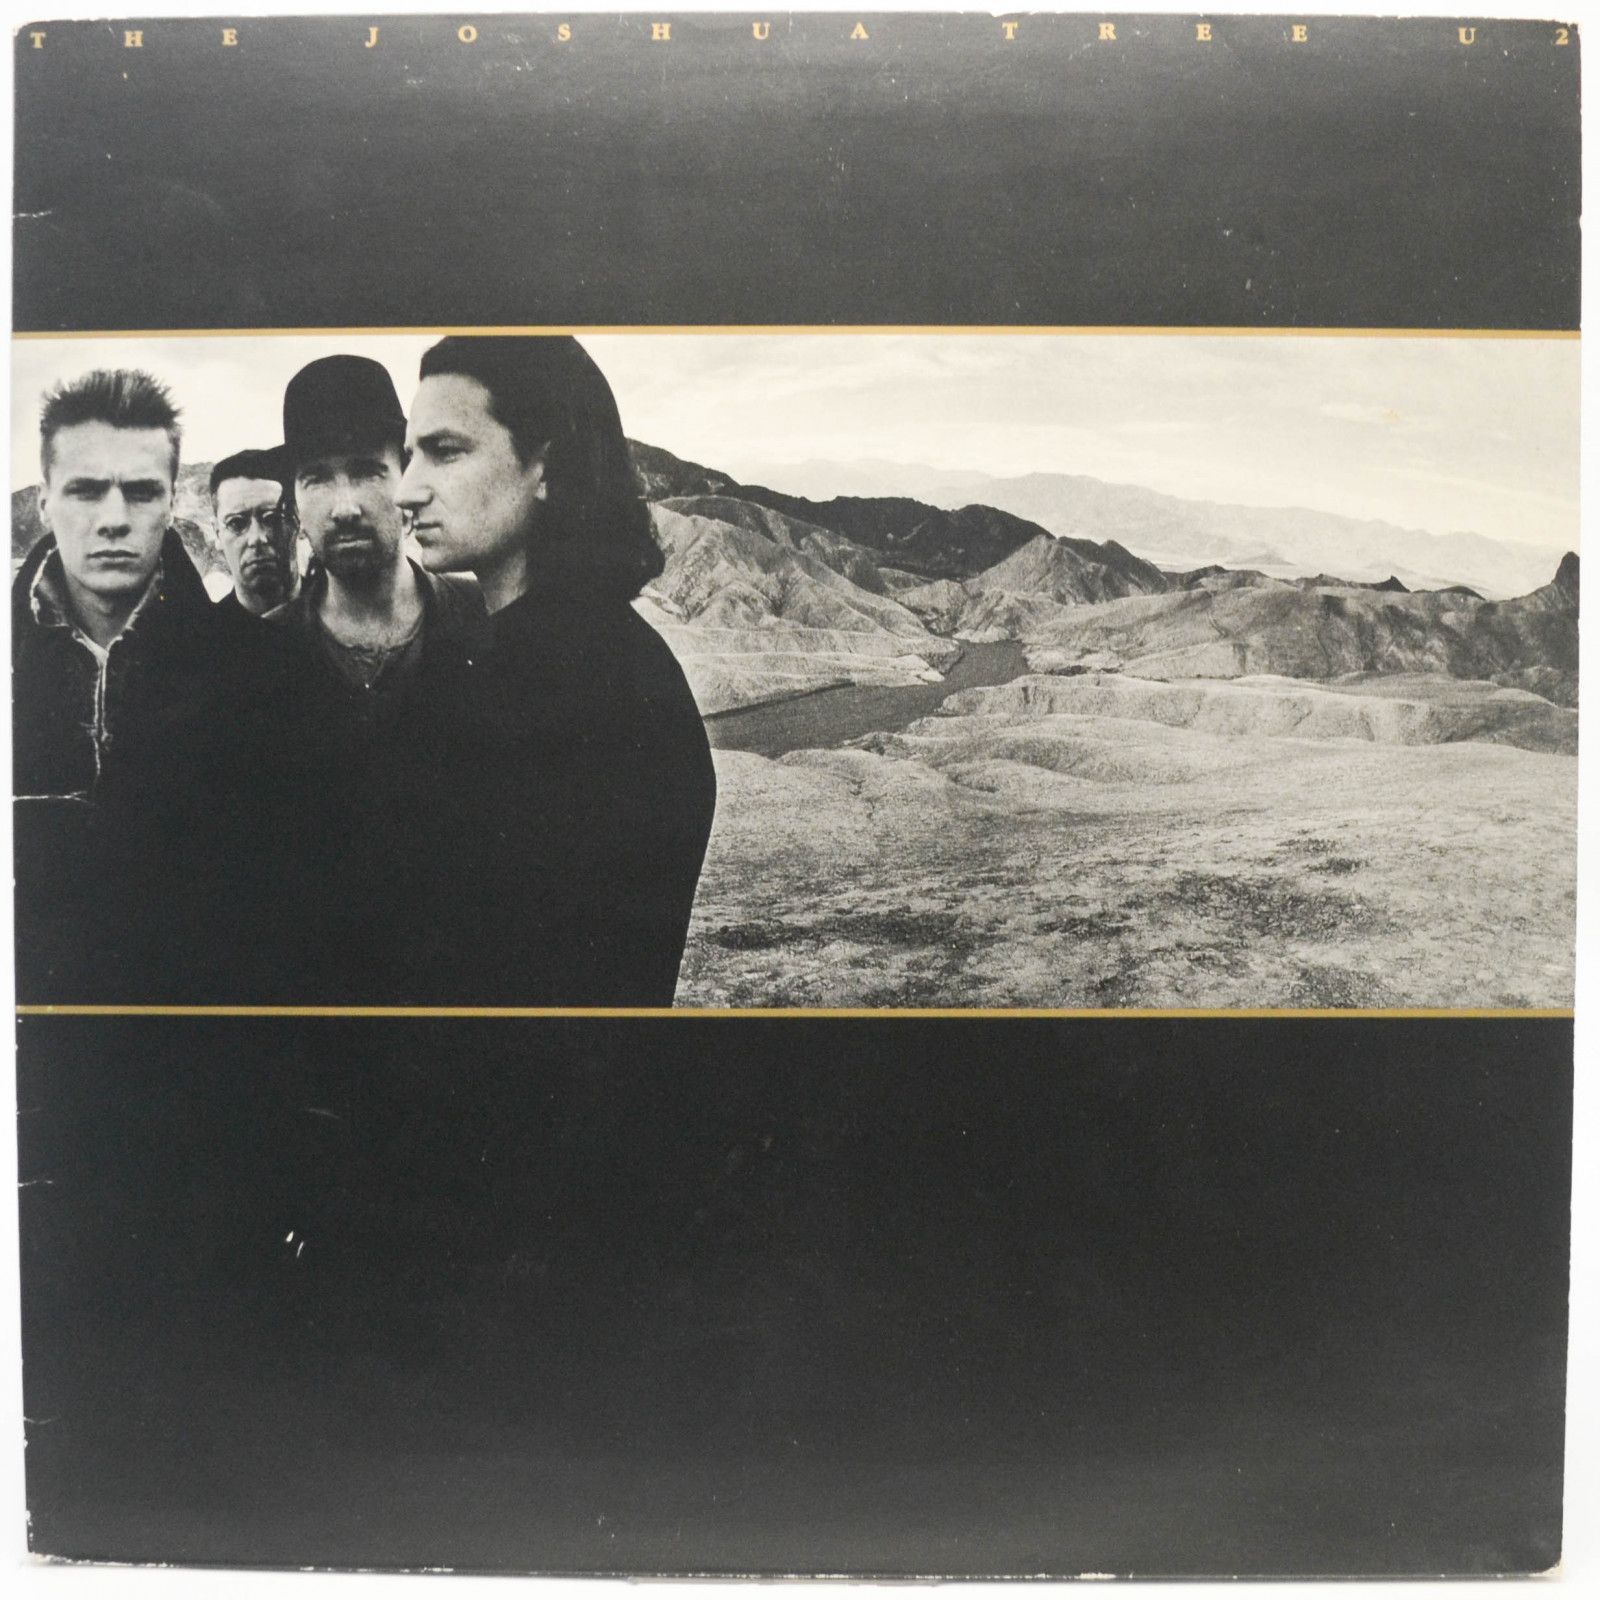 U2 — The Joshua Tree, 1987